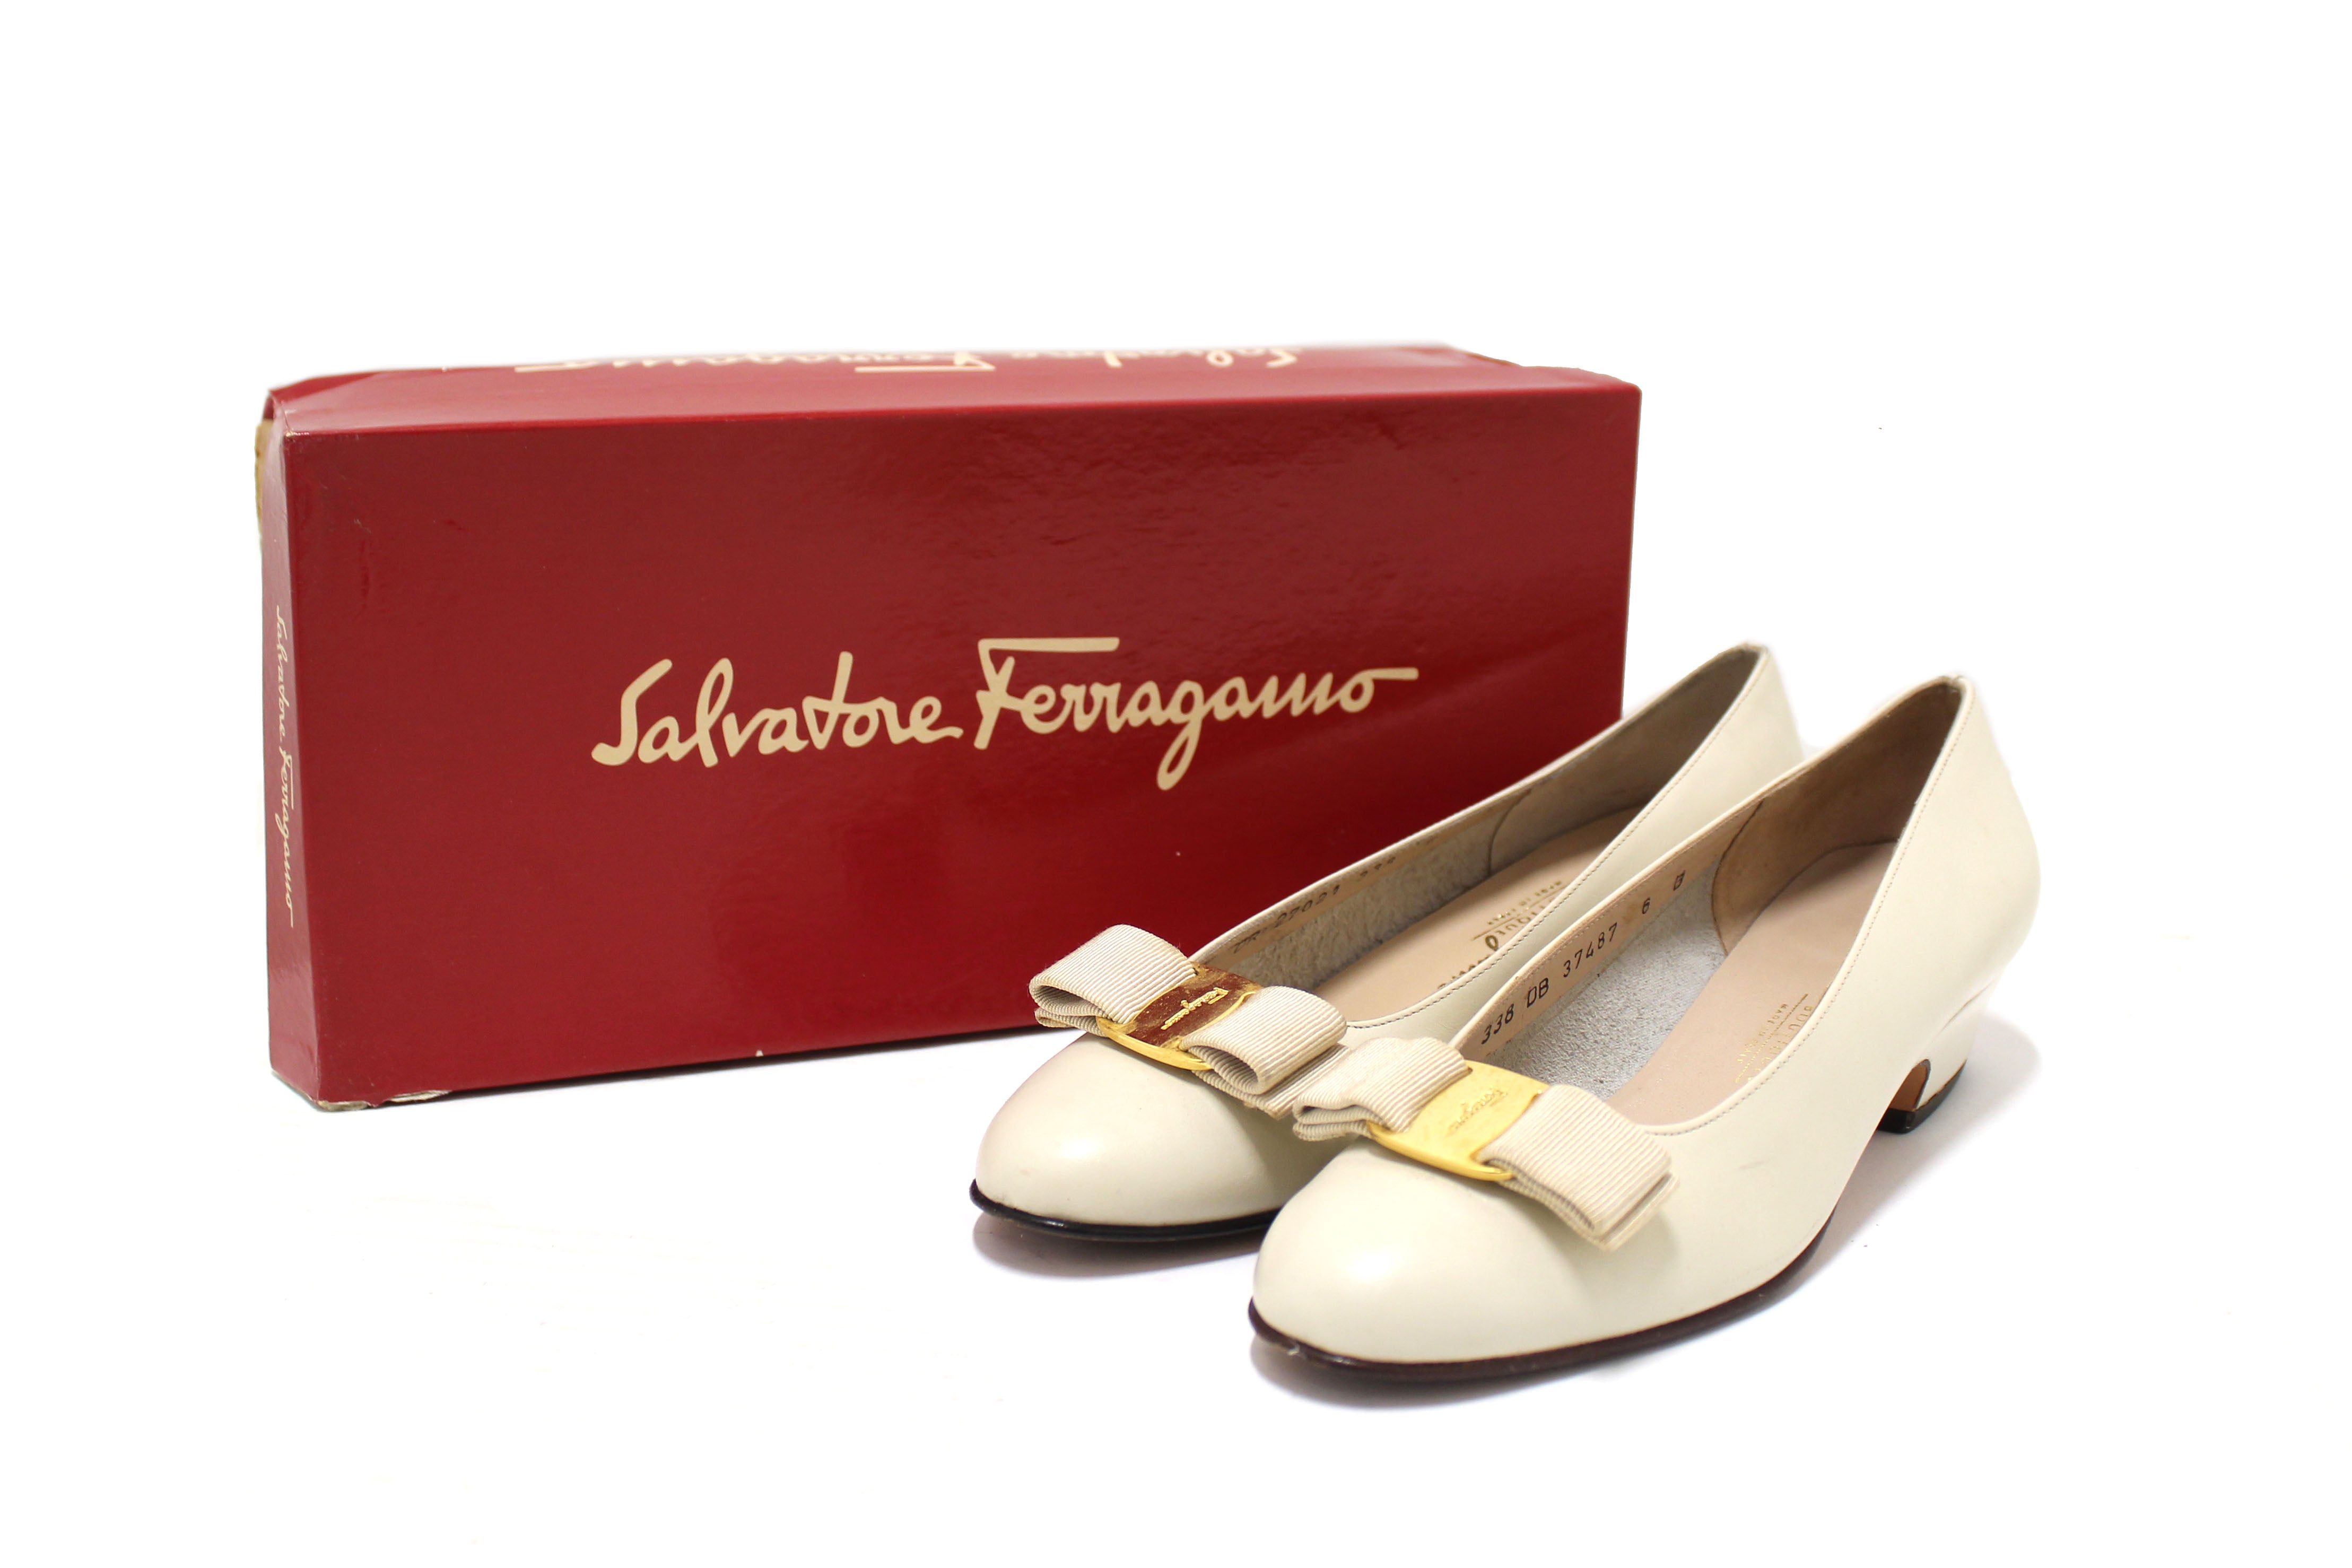 Authentic Salvatore Ferragamo Calfskin White Leather Kitten Heel with Bow Size 6B